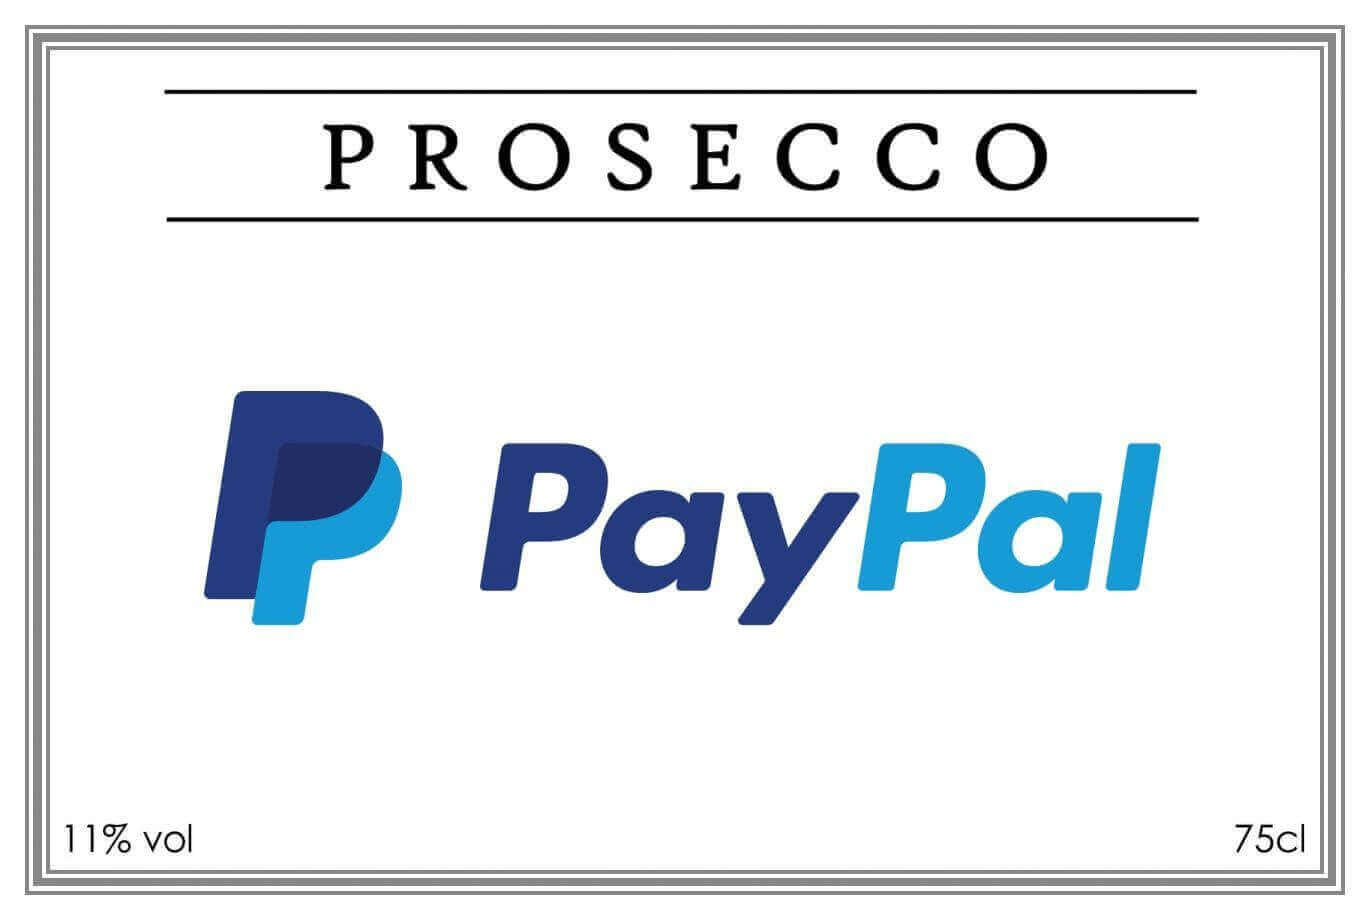 Paypal Branded Prosecco Label